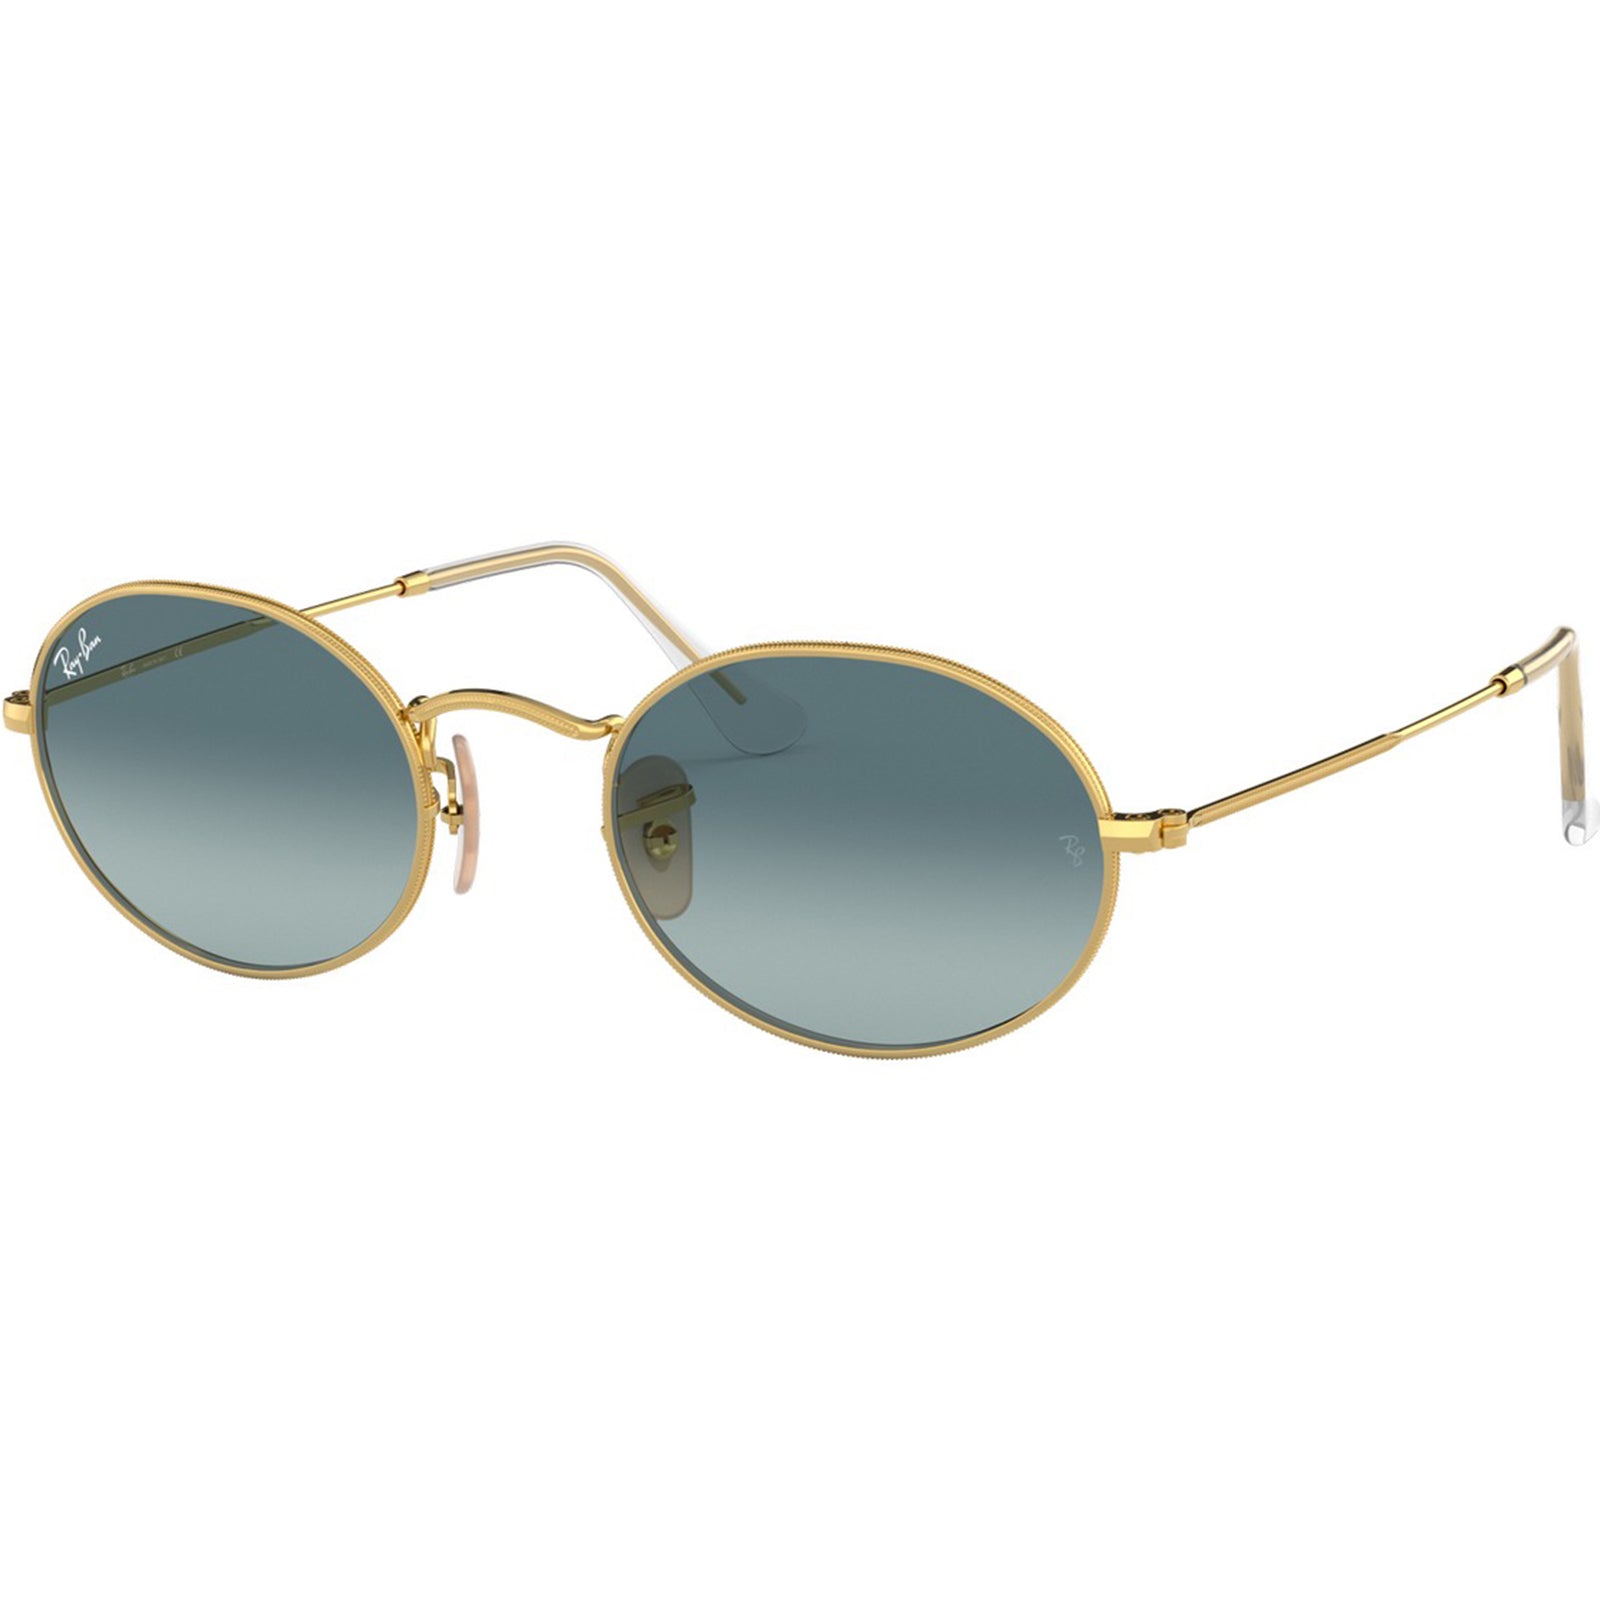 Aggregate 279+ ray ban lifestyle sunglasses latest